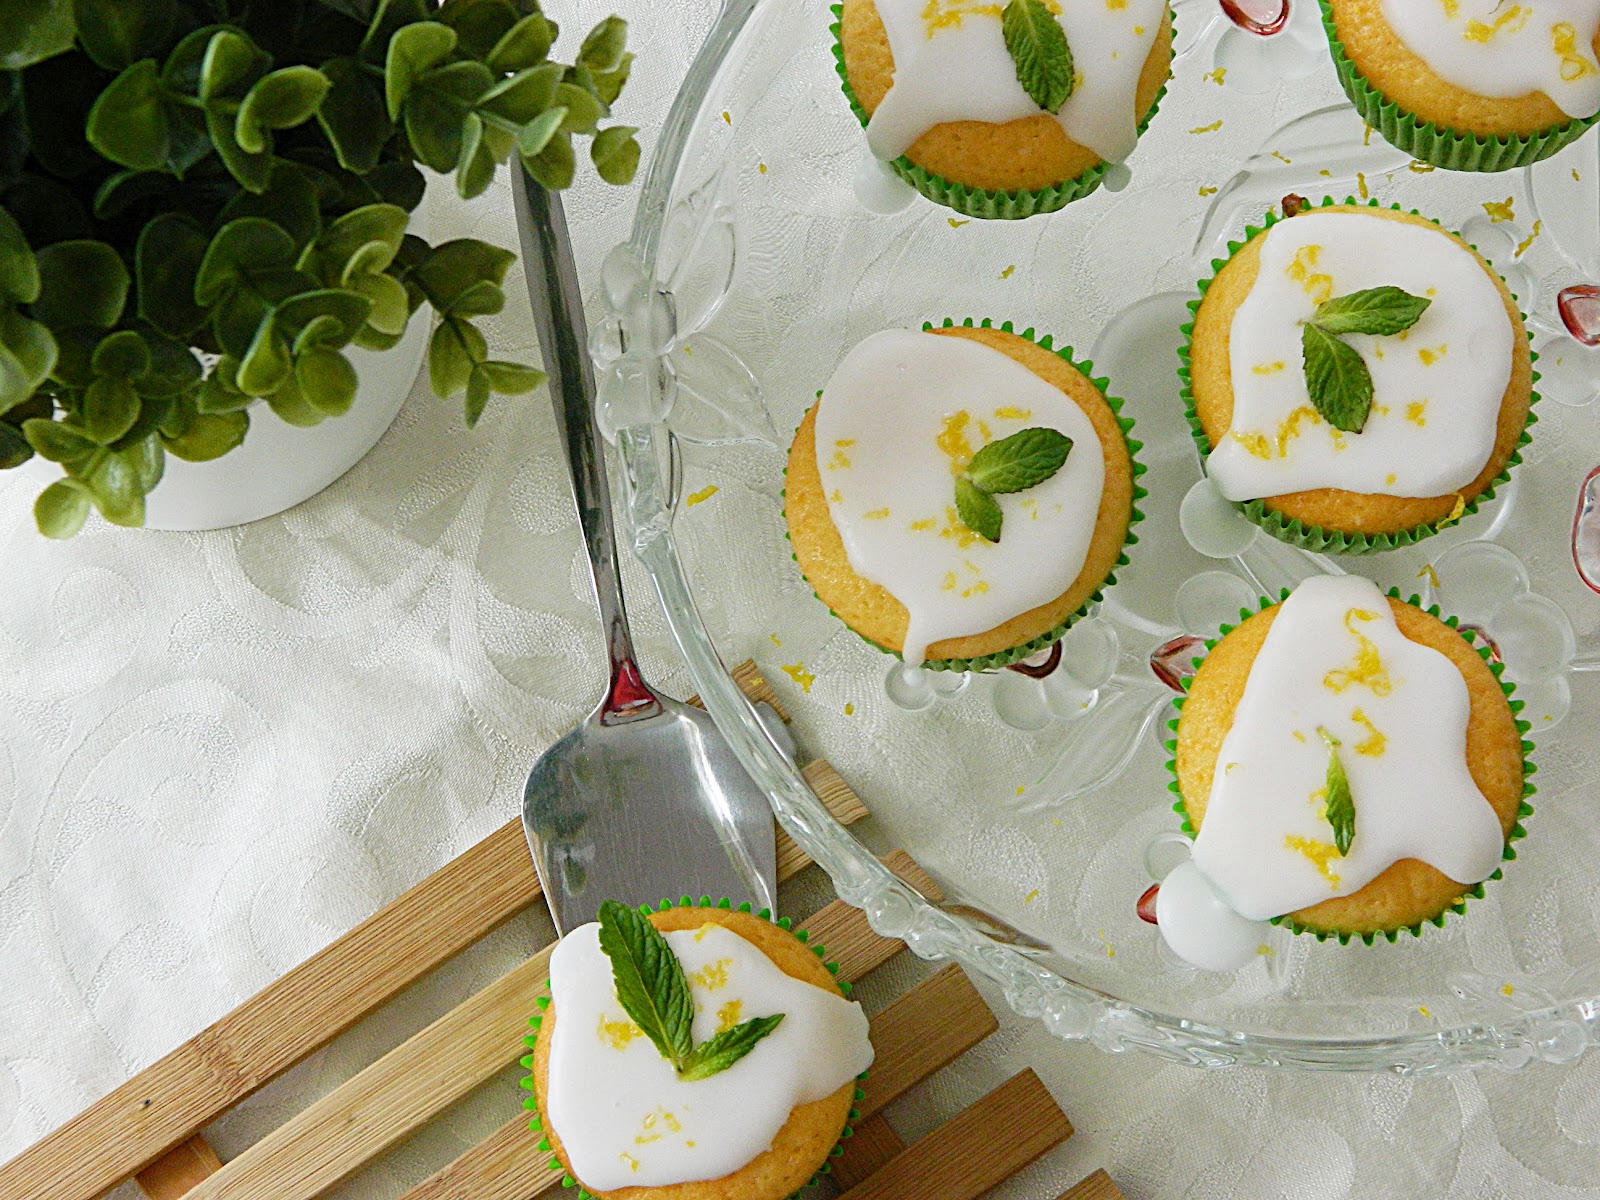 Dr Ola&amp;#39;s kitchen: Lemon-Yogurt Cupcakes with sugar glaze.(Zitronen ...